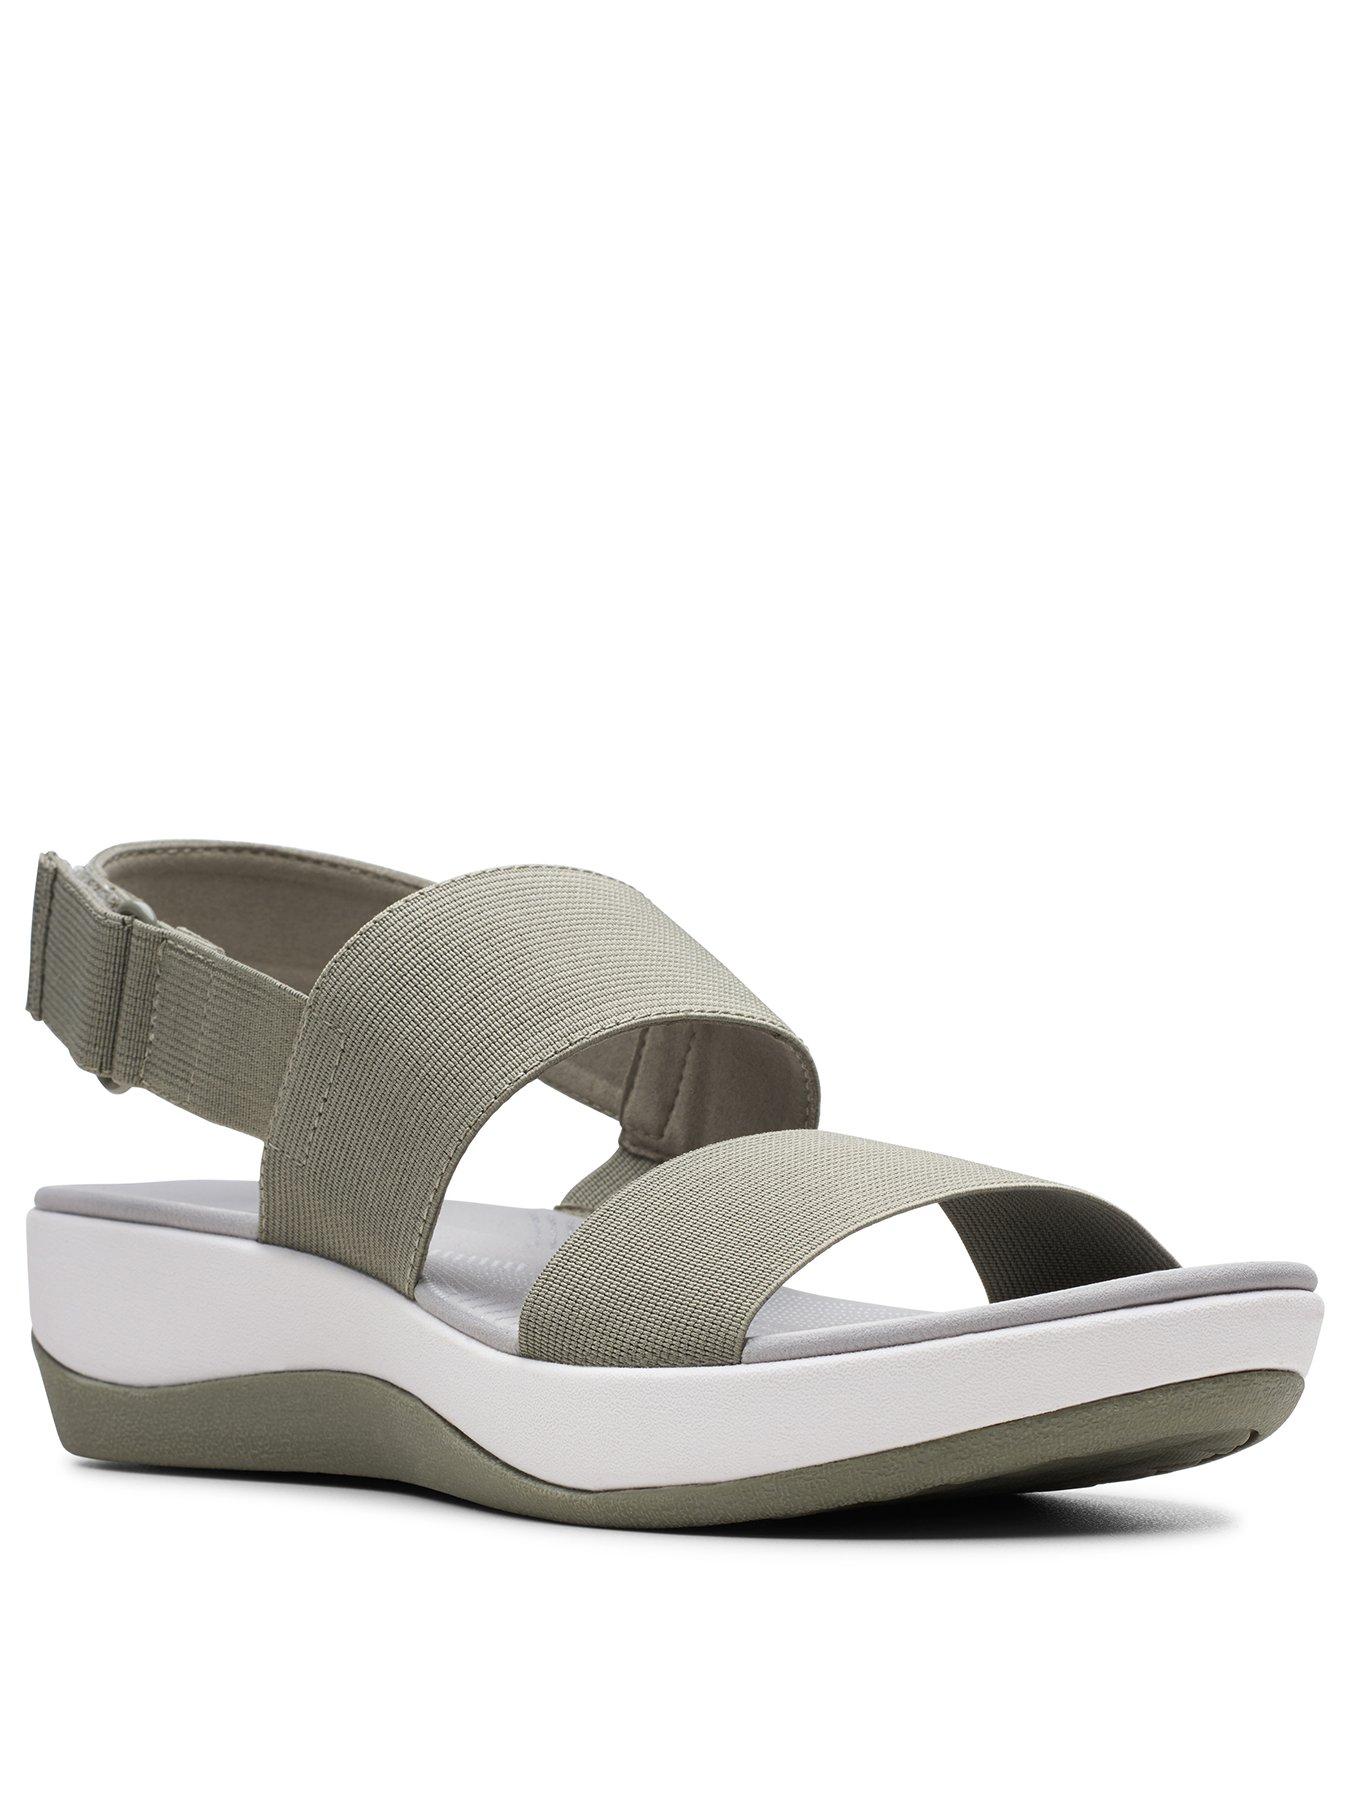 Clarks | Sandals \u0026 flip flops | Shoes 